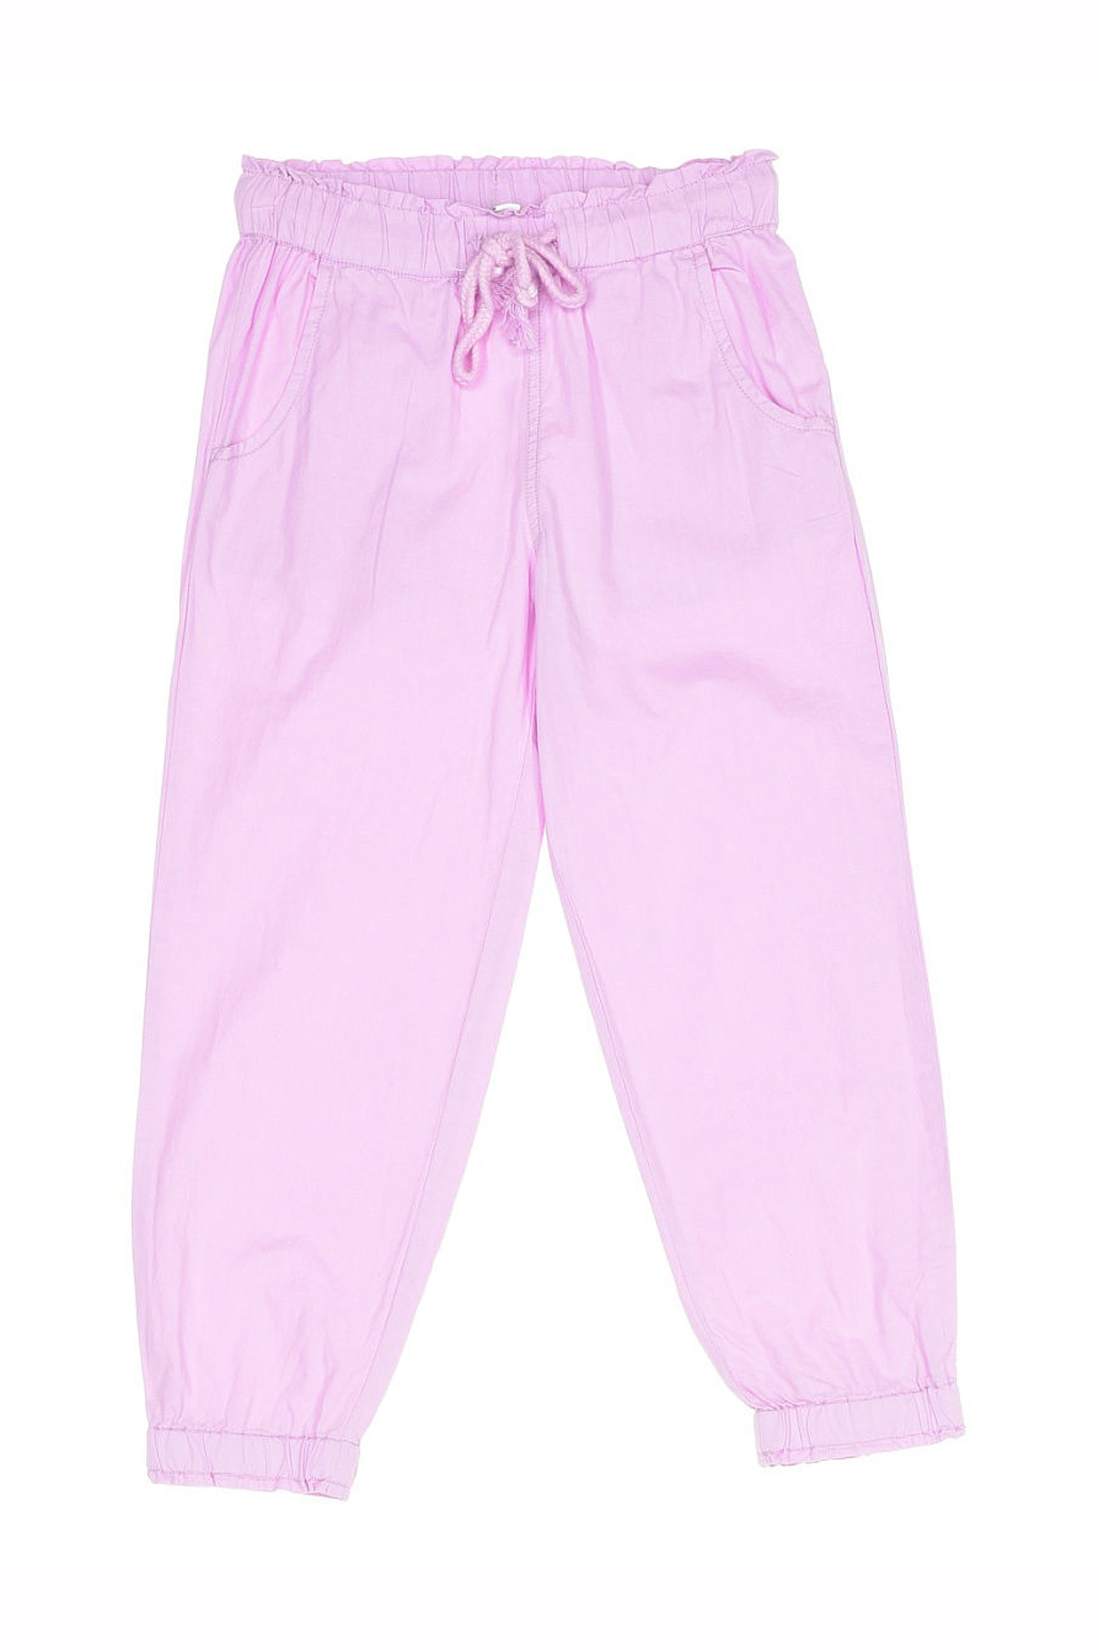 Брюки для девочки (арт. baon BK299001), размер 98-104, цвет розовый Брюки для девочки (арт. baon BK299001) - фото 2